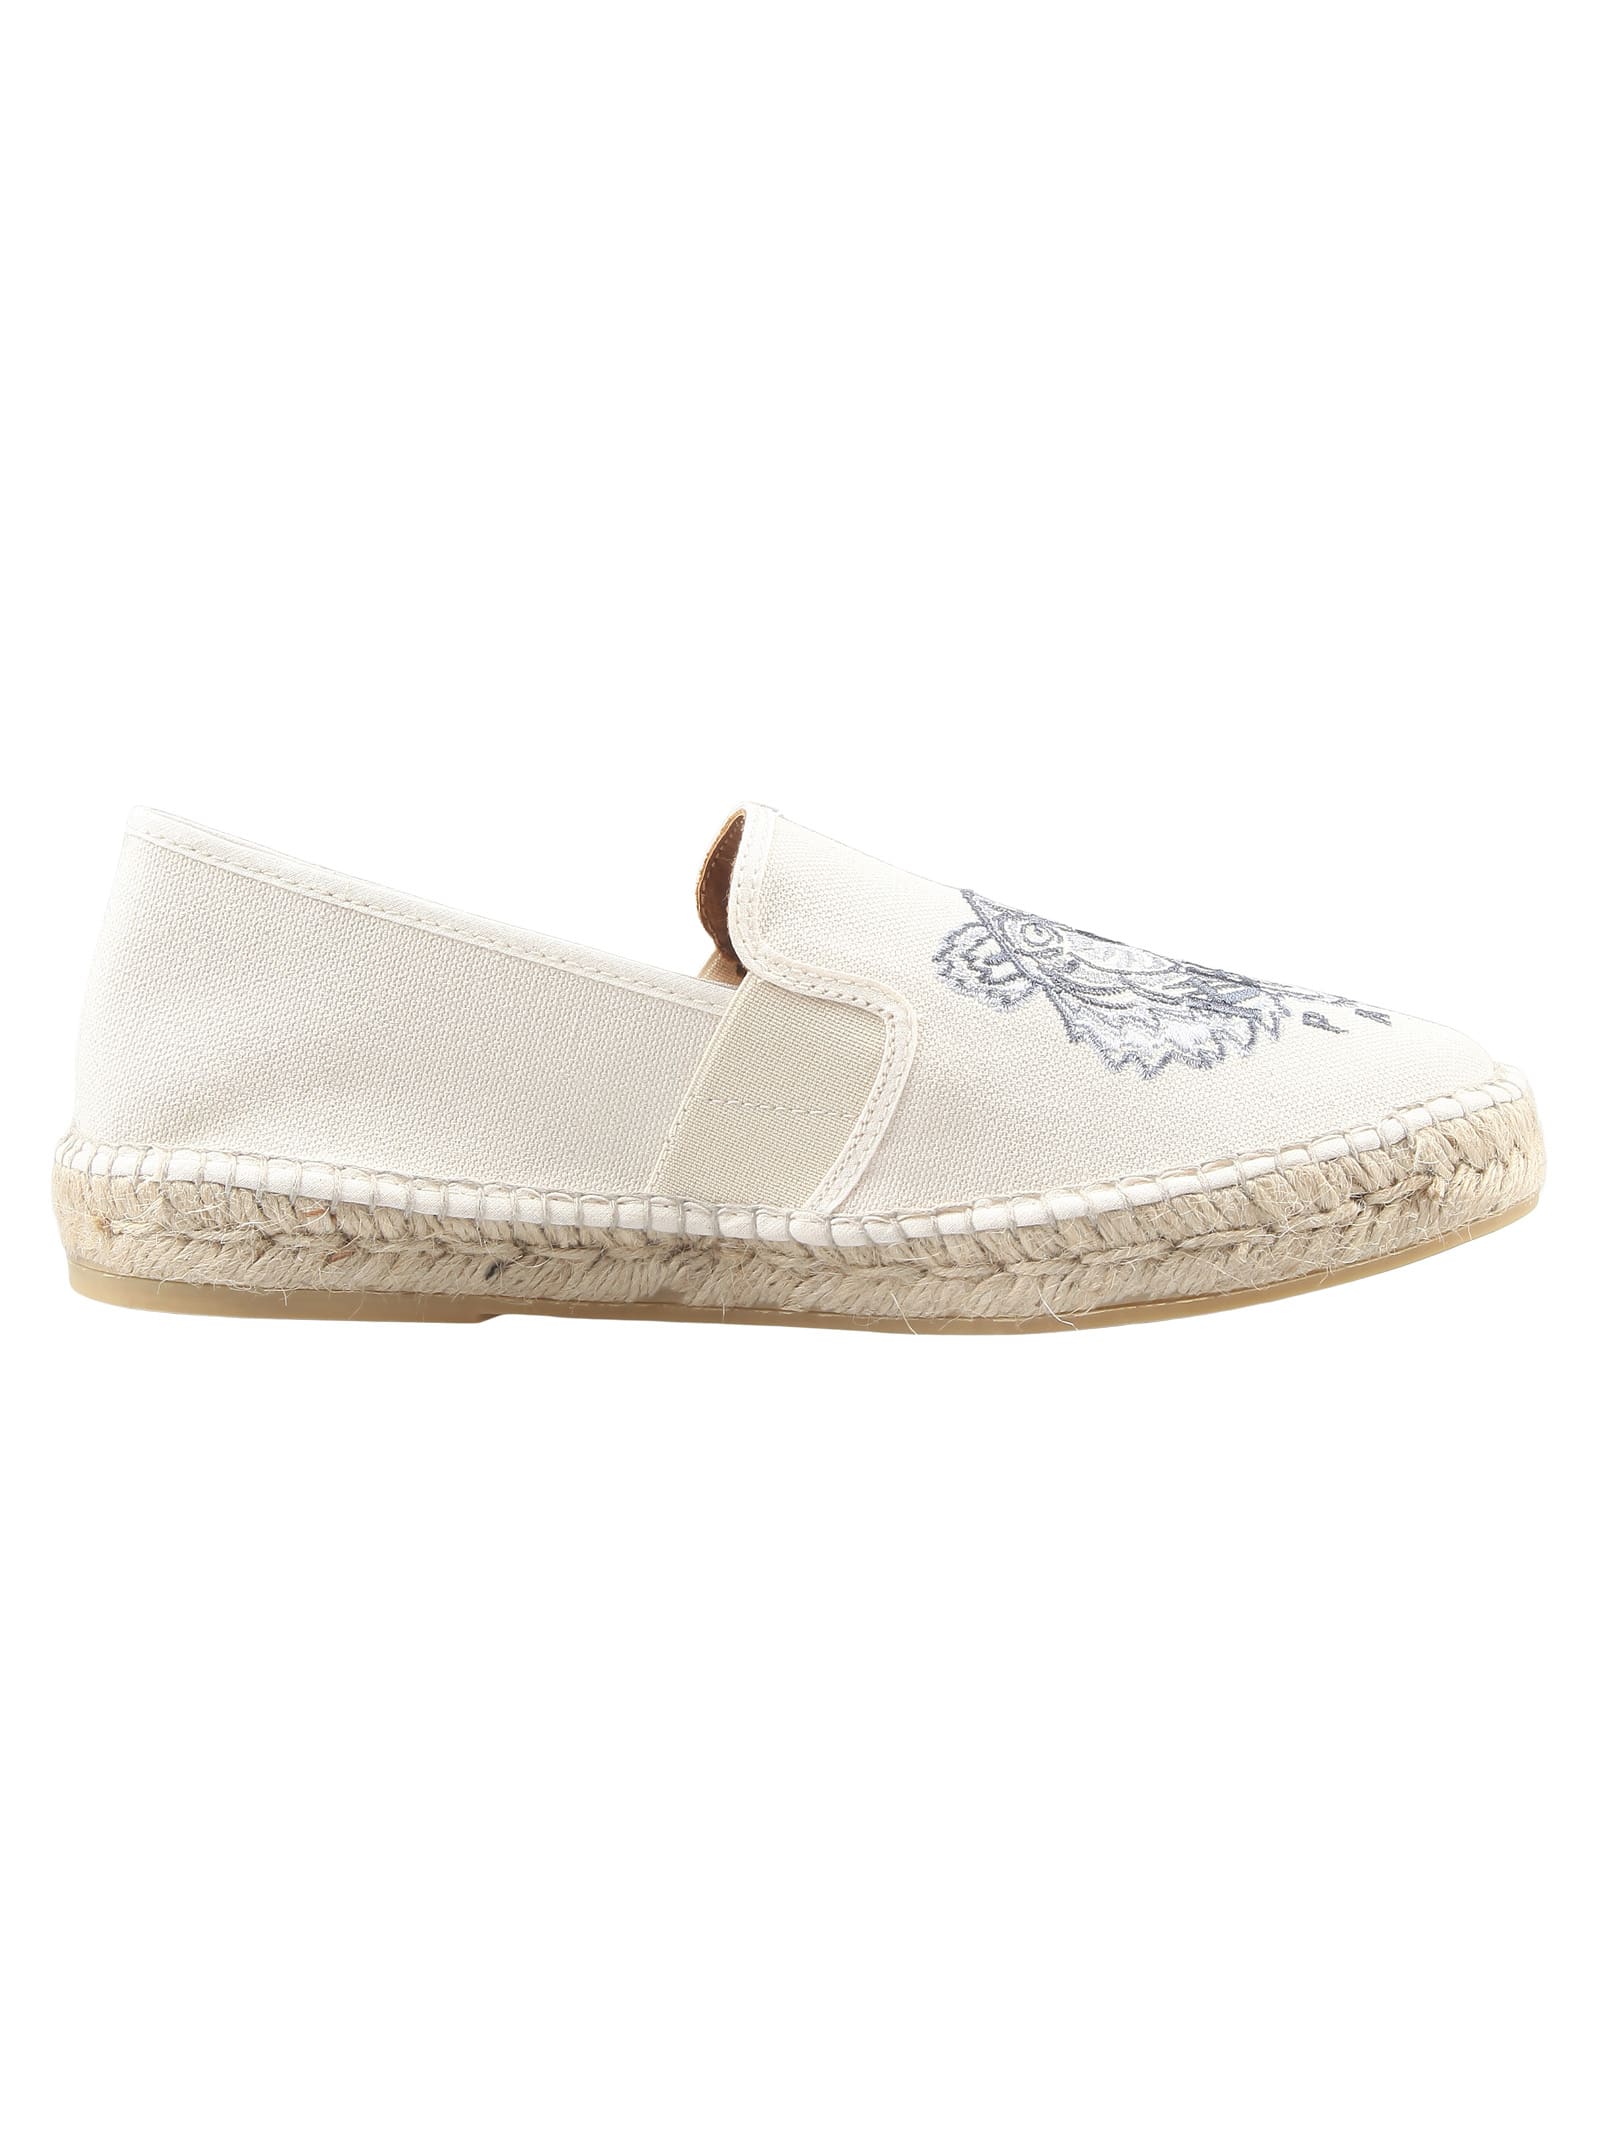 Kenzo Loafers \u0026 Boat Shoes | italist 